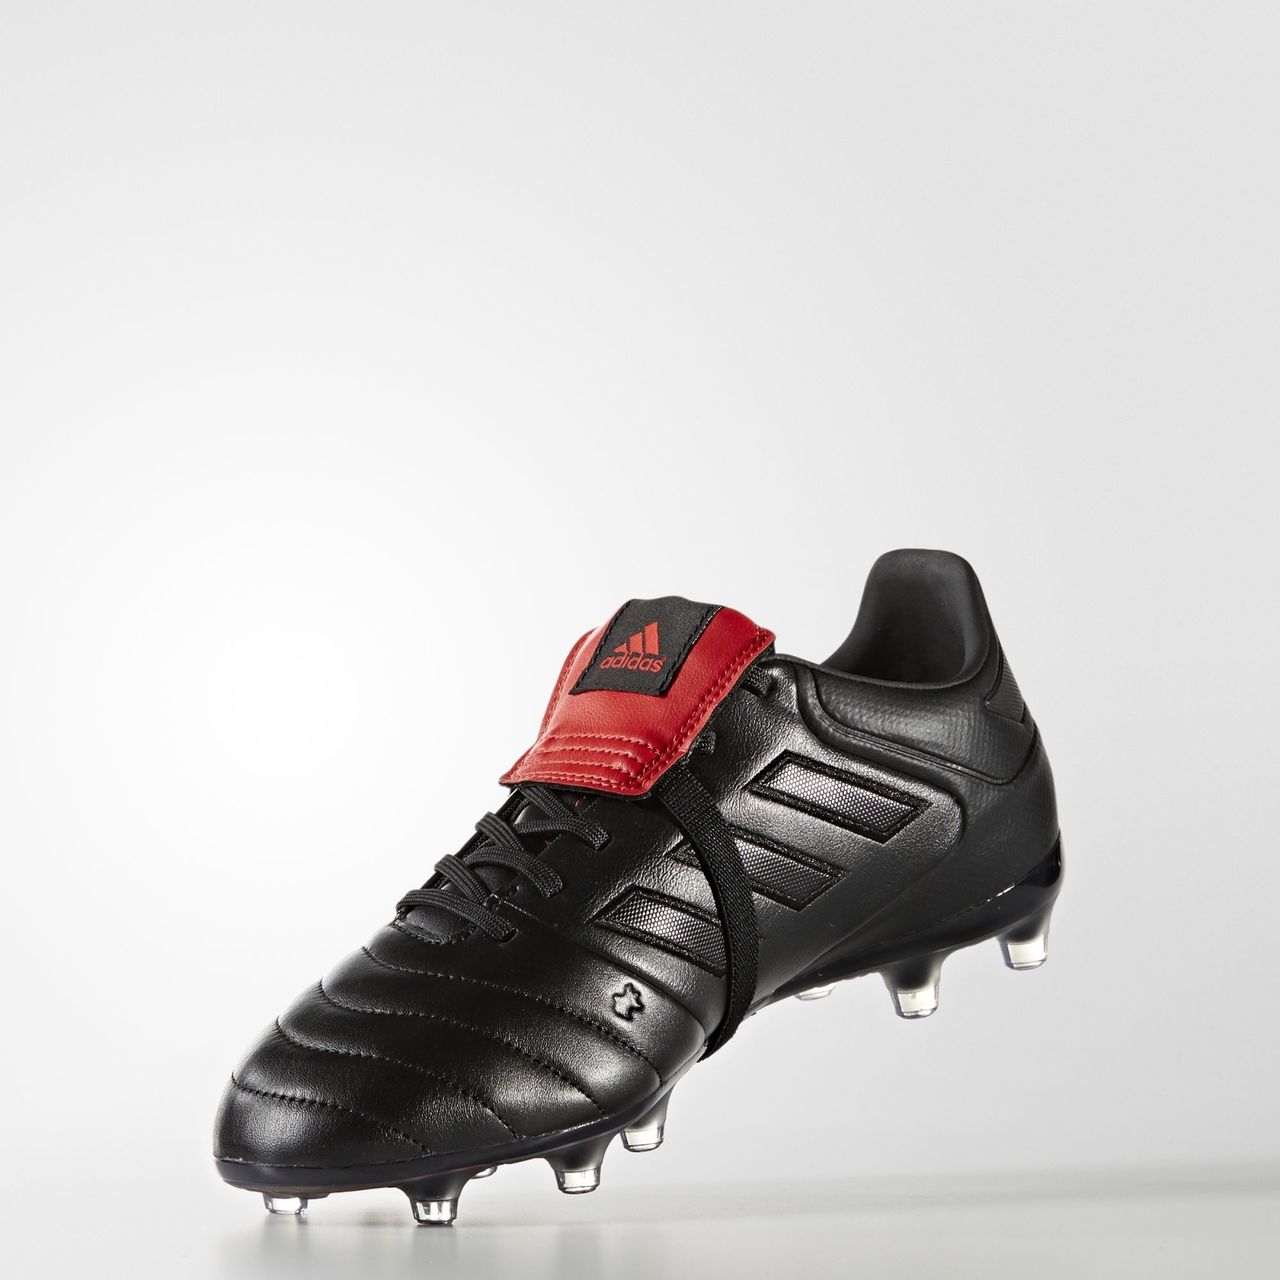 Adidas Copa Gloro 17.2 Firm Ground Boots - Core Black / Core Black / Red |  Football boots | Football shirt blog